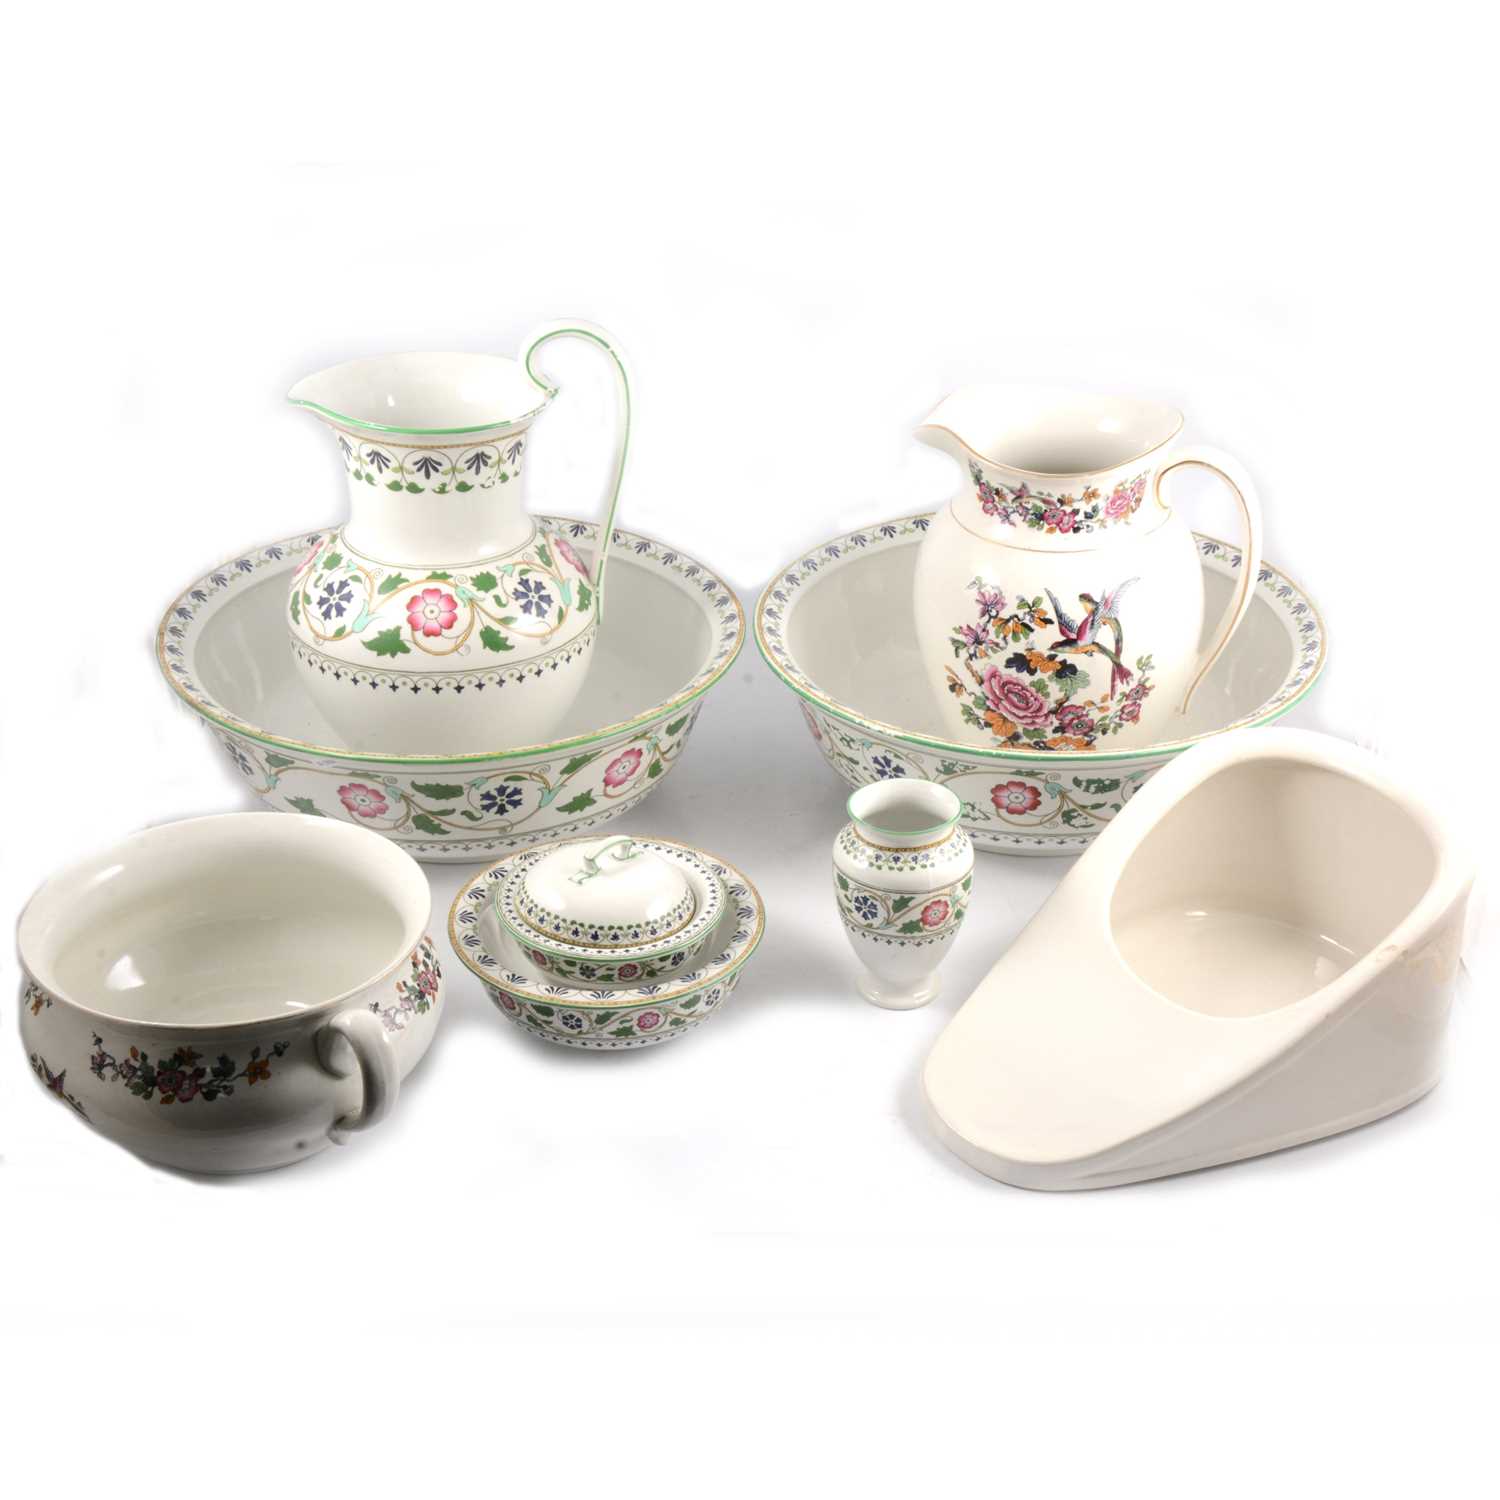 Lot 93 - Adderleys Ltd 'Persian' pattern wash set, and other ceramics.